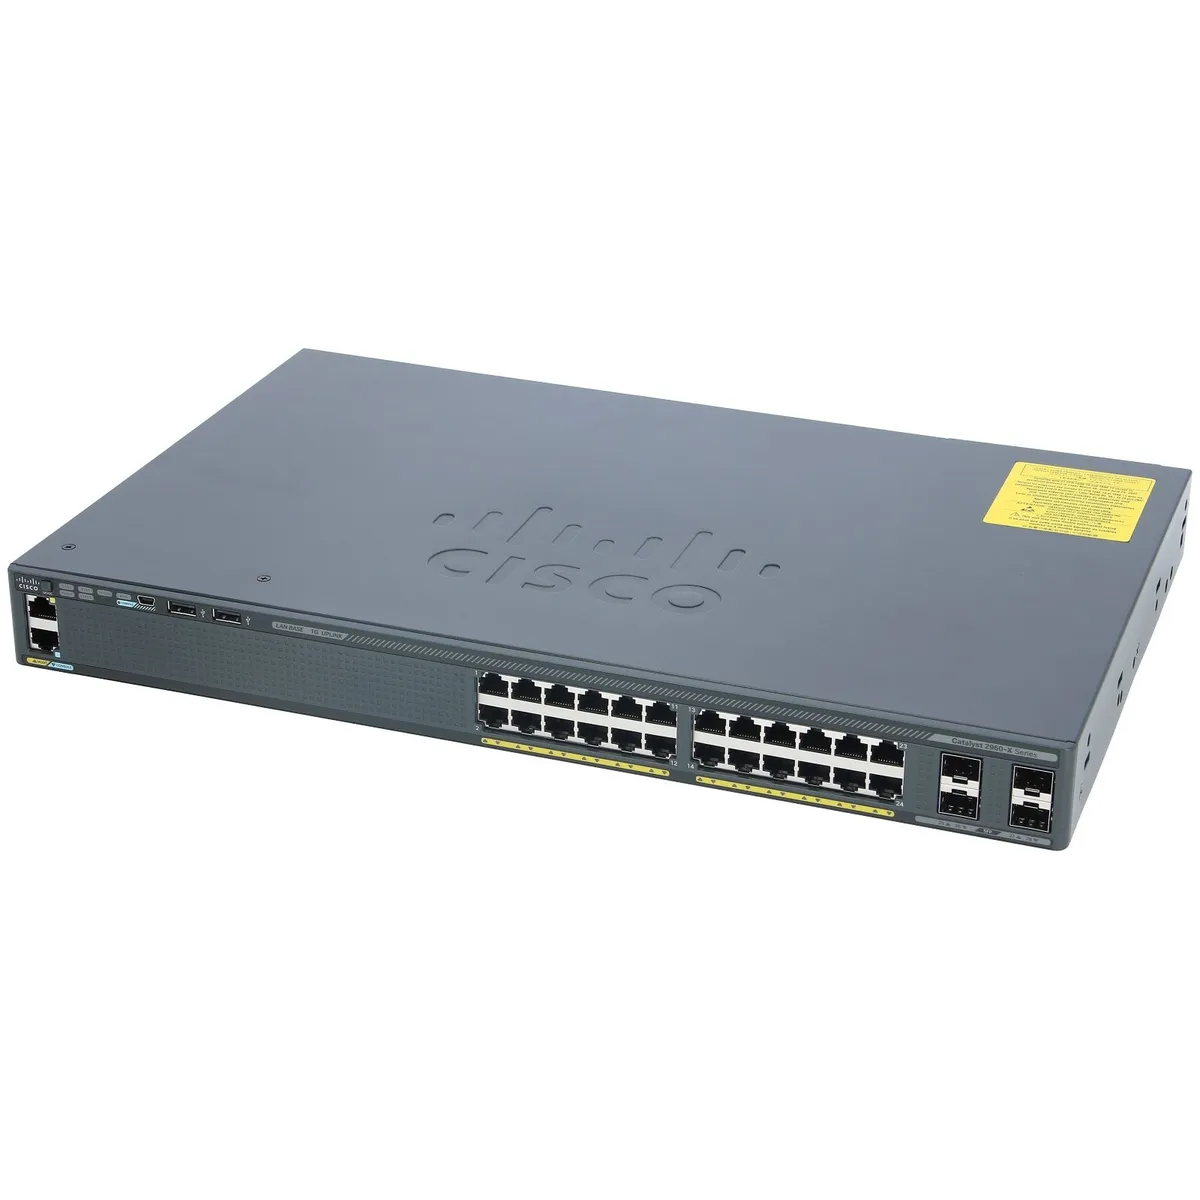 Cisco Catalyst 2960 WS-C2960X-24PS-L 24xRJ-45 1Gbps PoE+ Switch (No Ears)